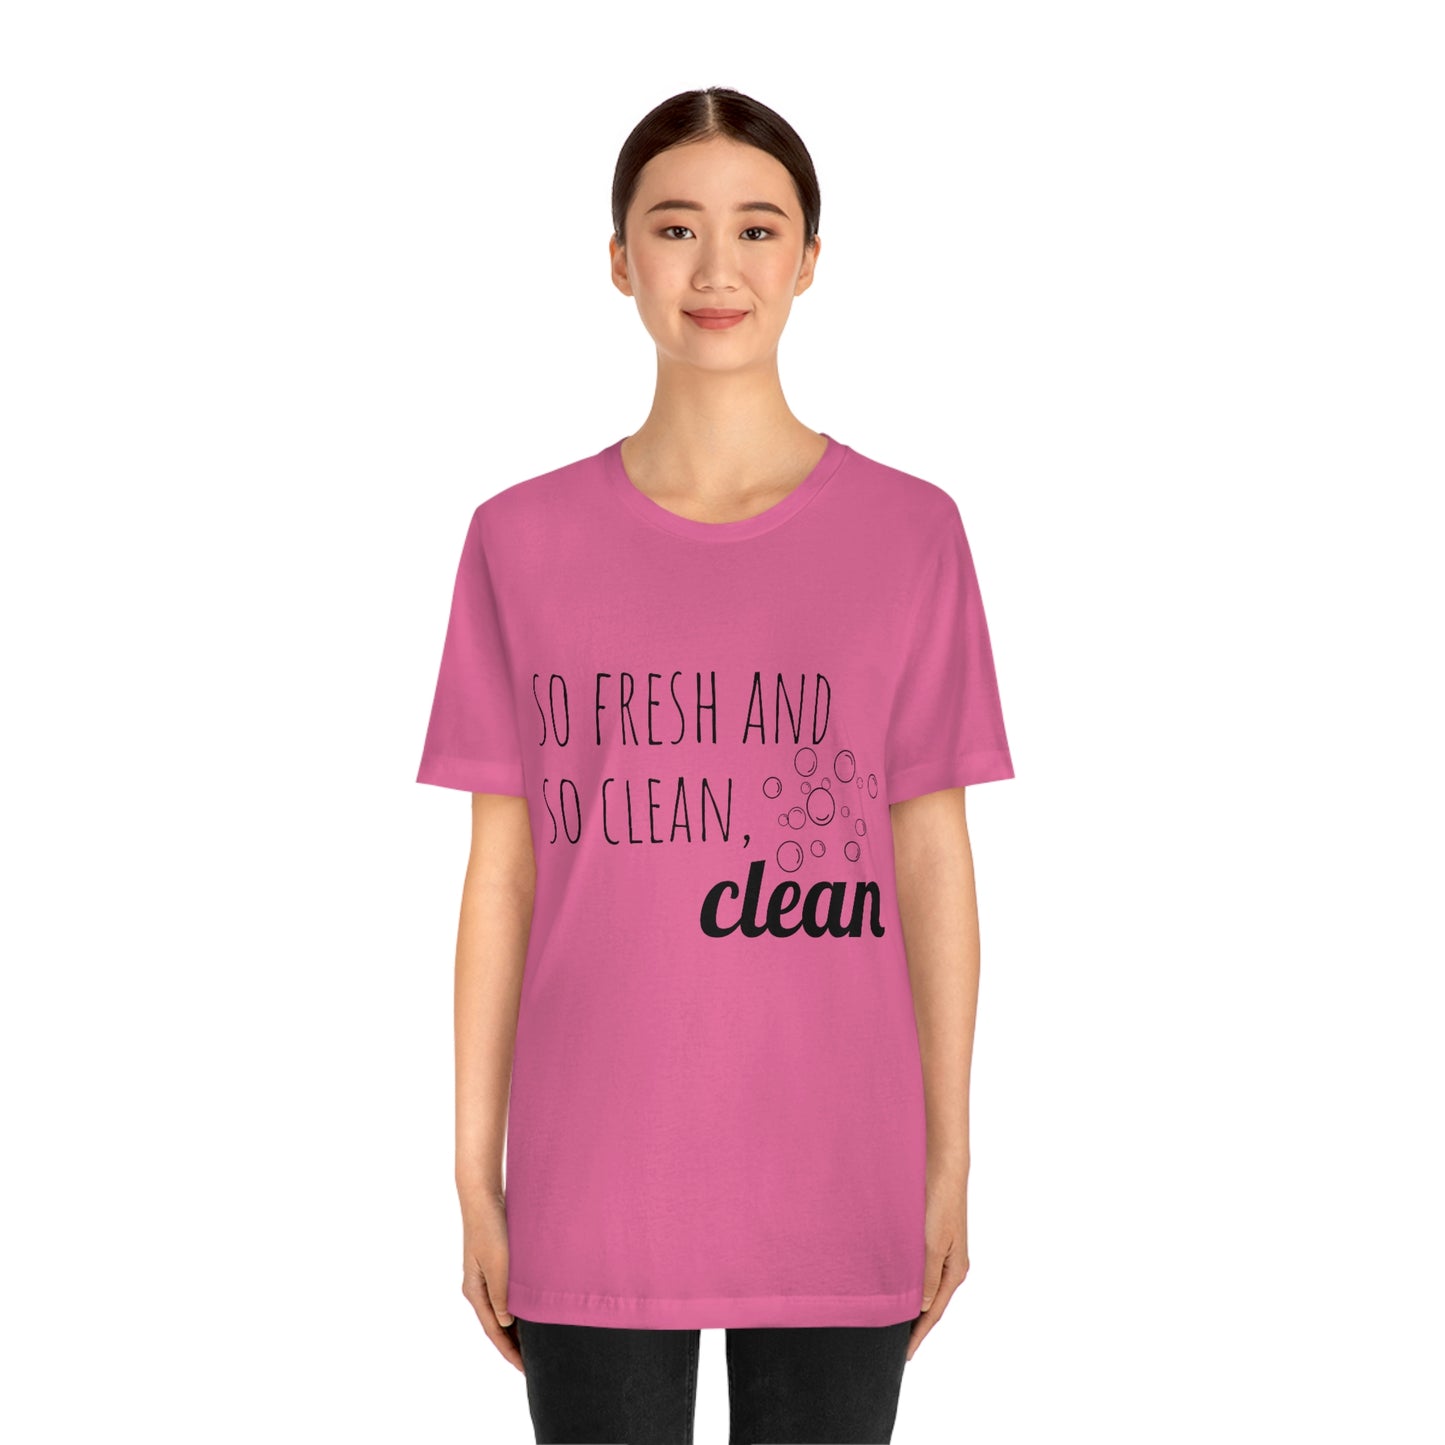 So fresh and so clean - Unisex T-shirt